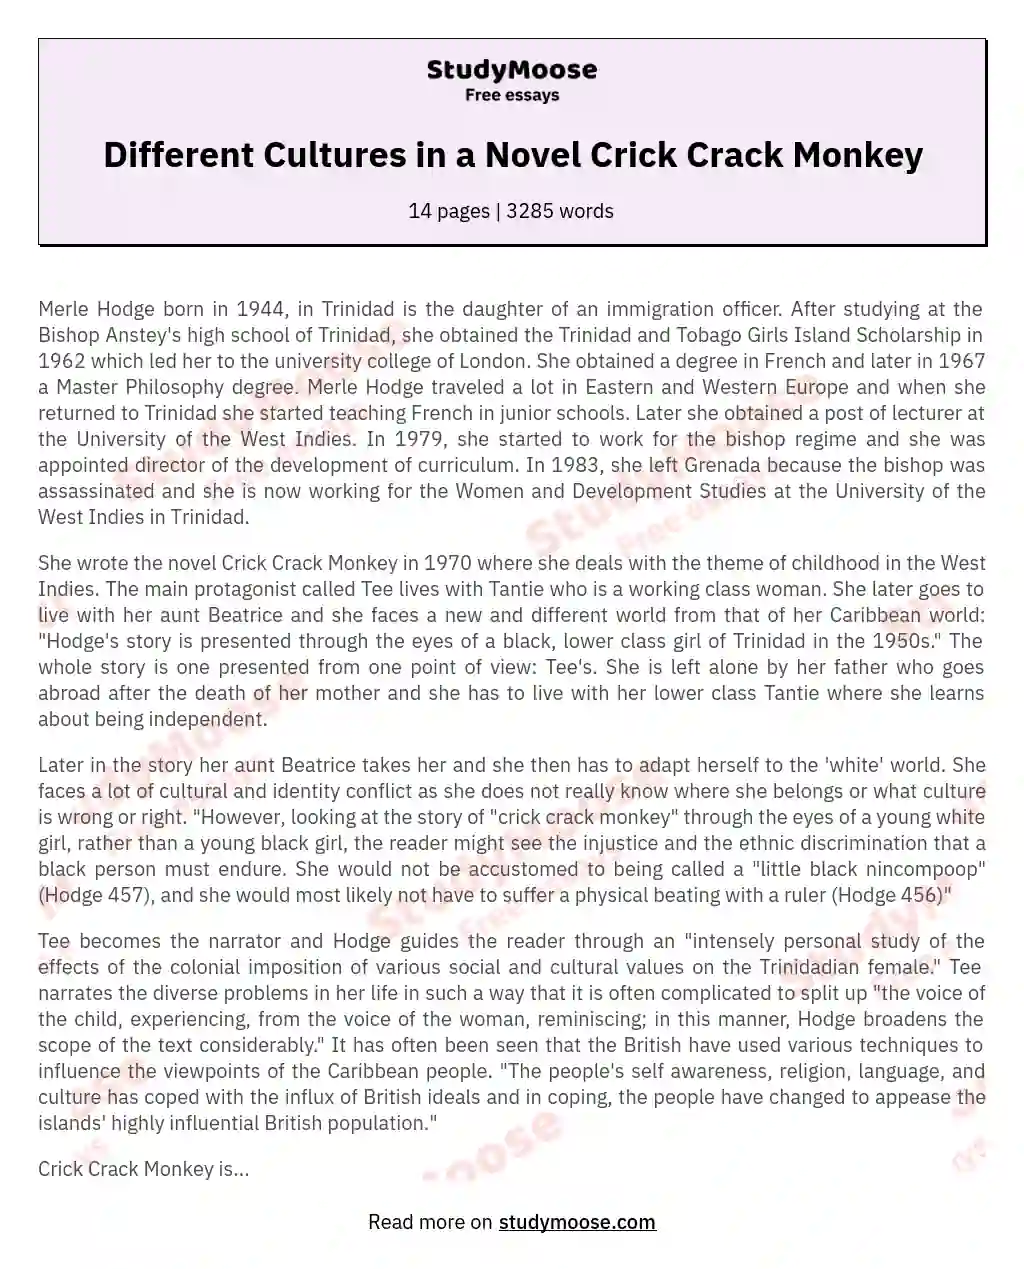 crick crack monkey summary